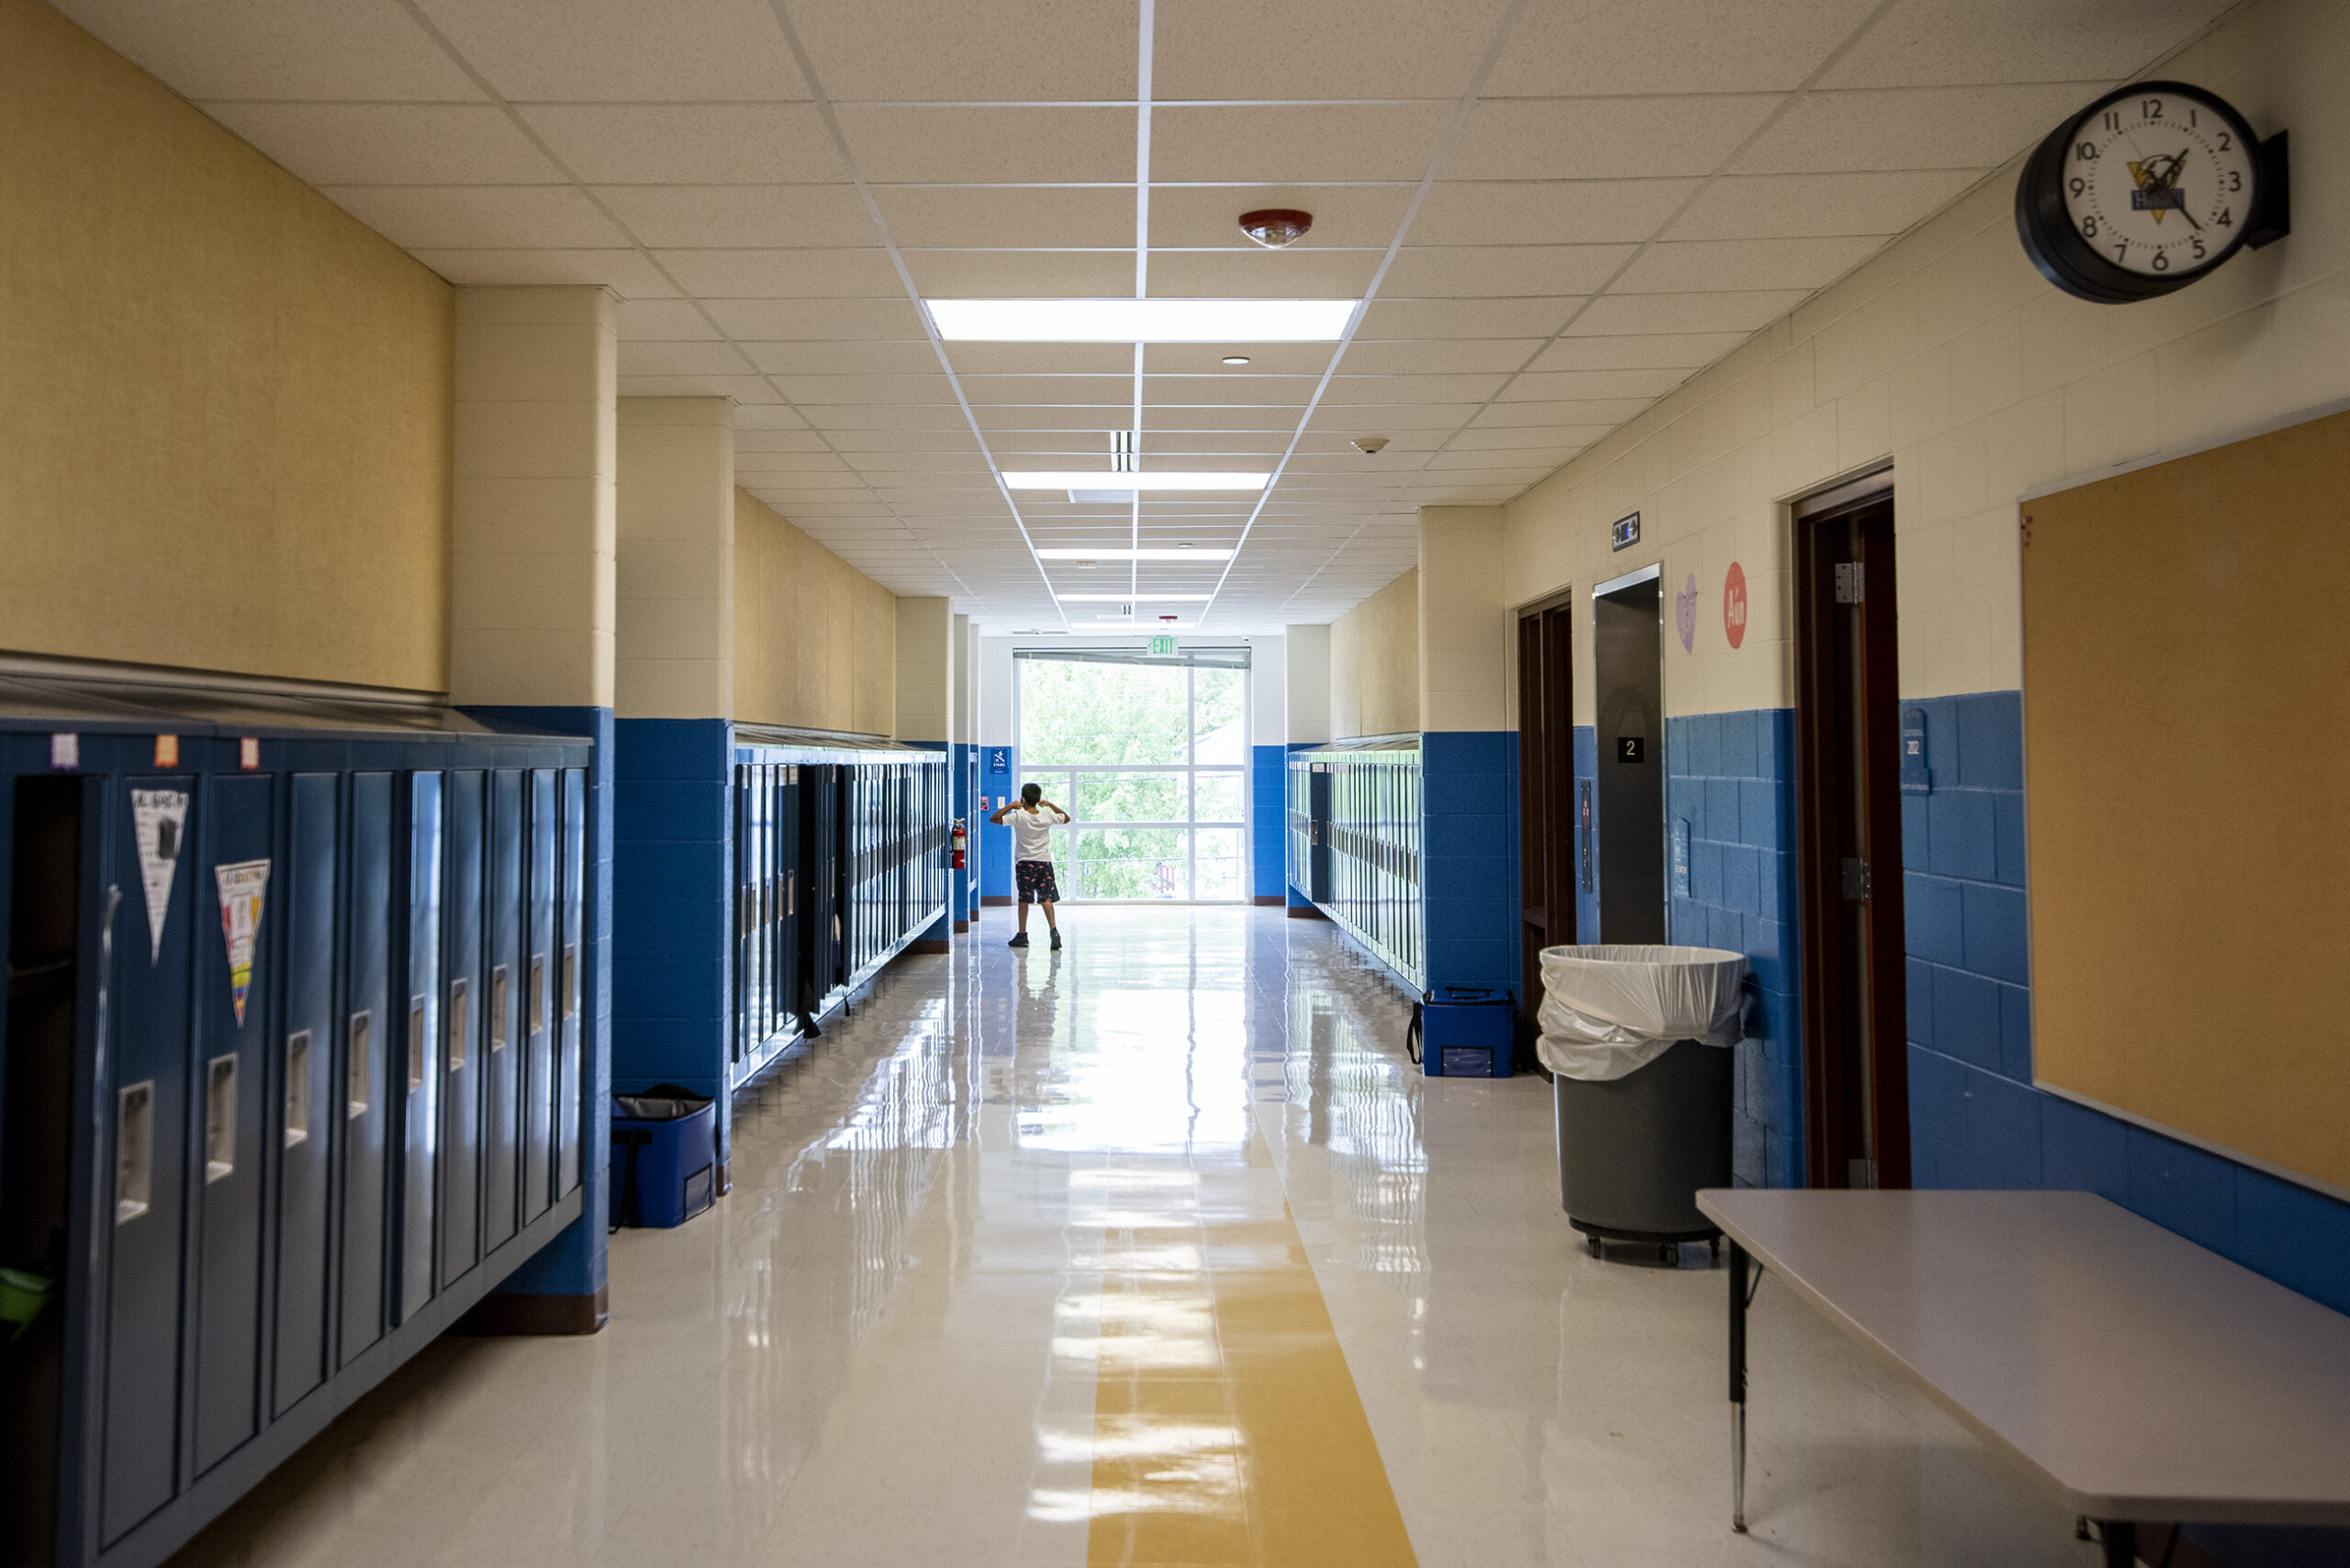 Blue lockers line a hallway in a school building.